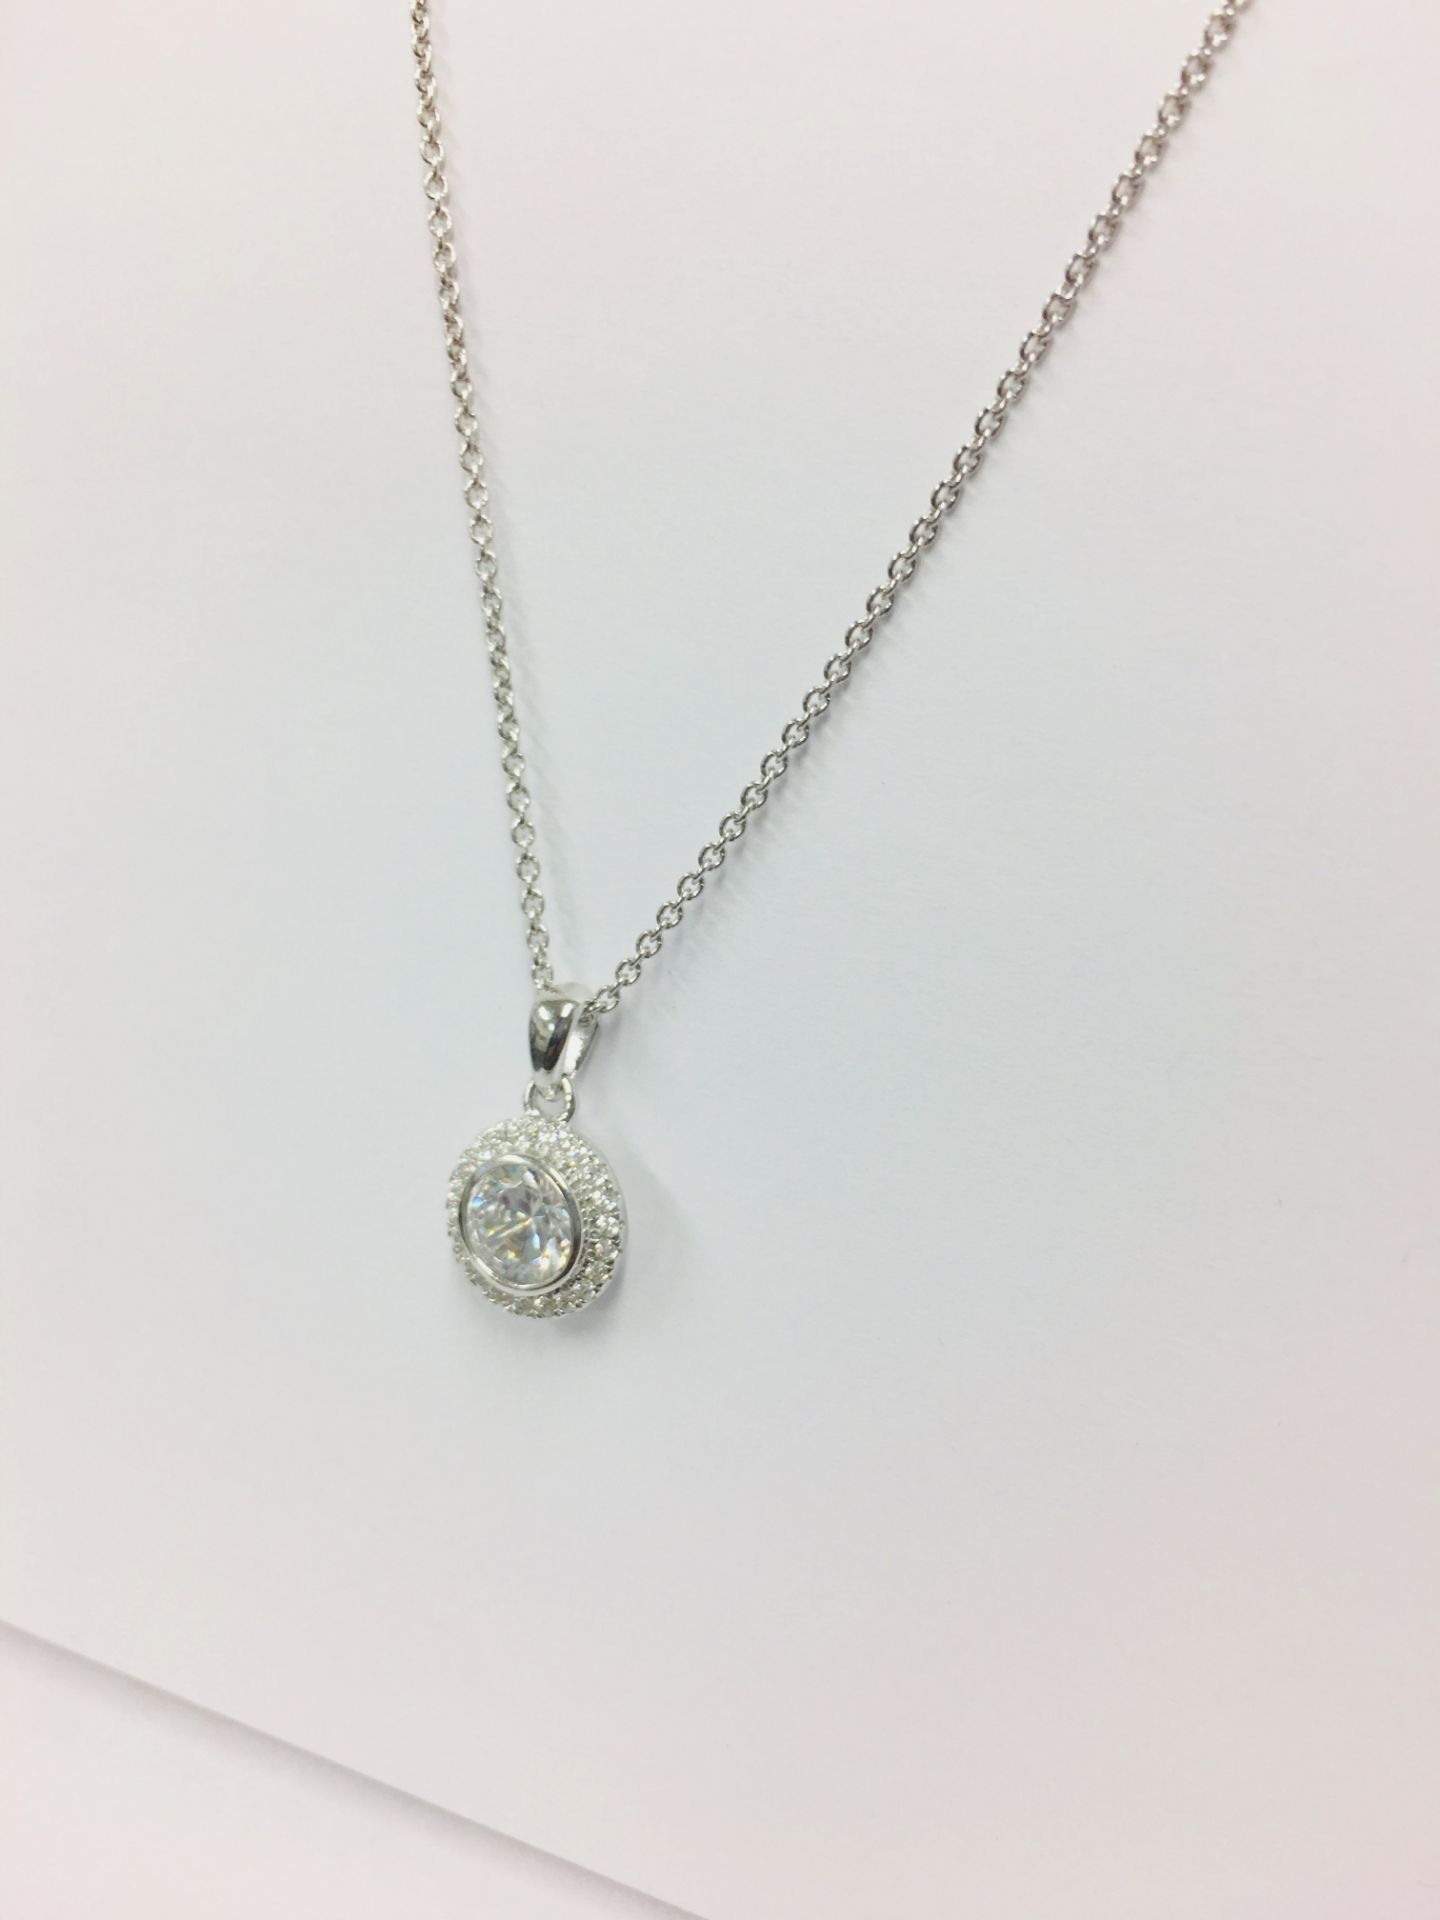 0.50ct diamond set pendant. Brilliant cut diamond Hcolour, si1 clarity. Halo setting with diamonds - Image 3 of 5